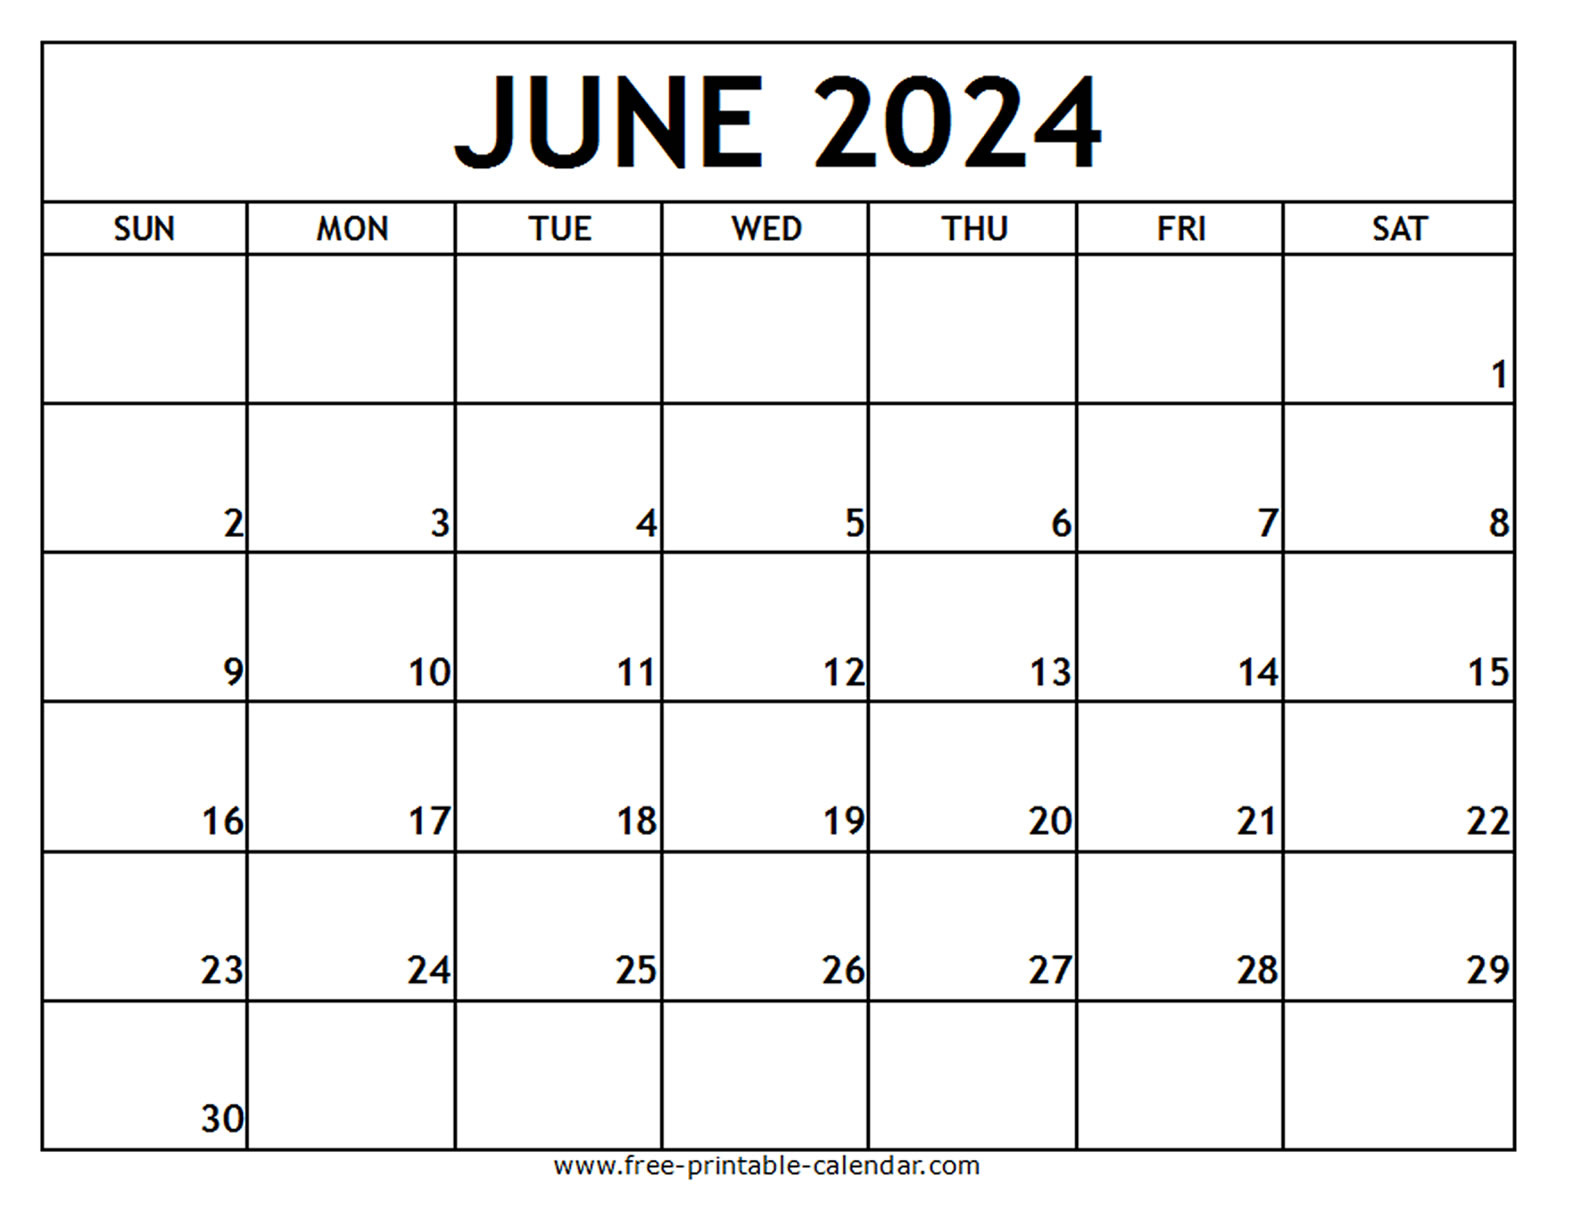 June 2024 Printable Calendar - Free-Printable-Calendar in Printable Monthly Calendar 2024 June